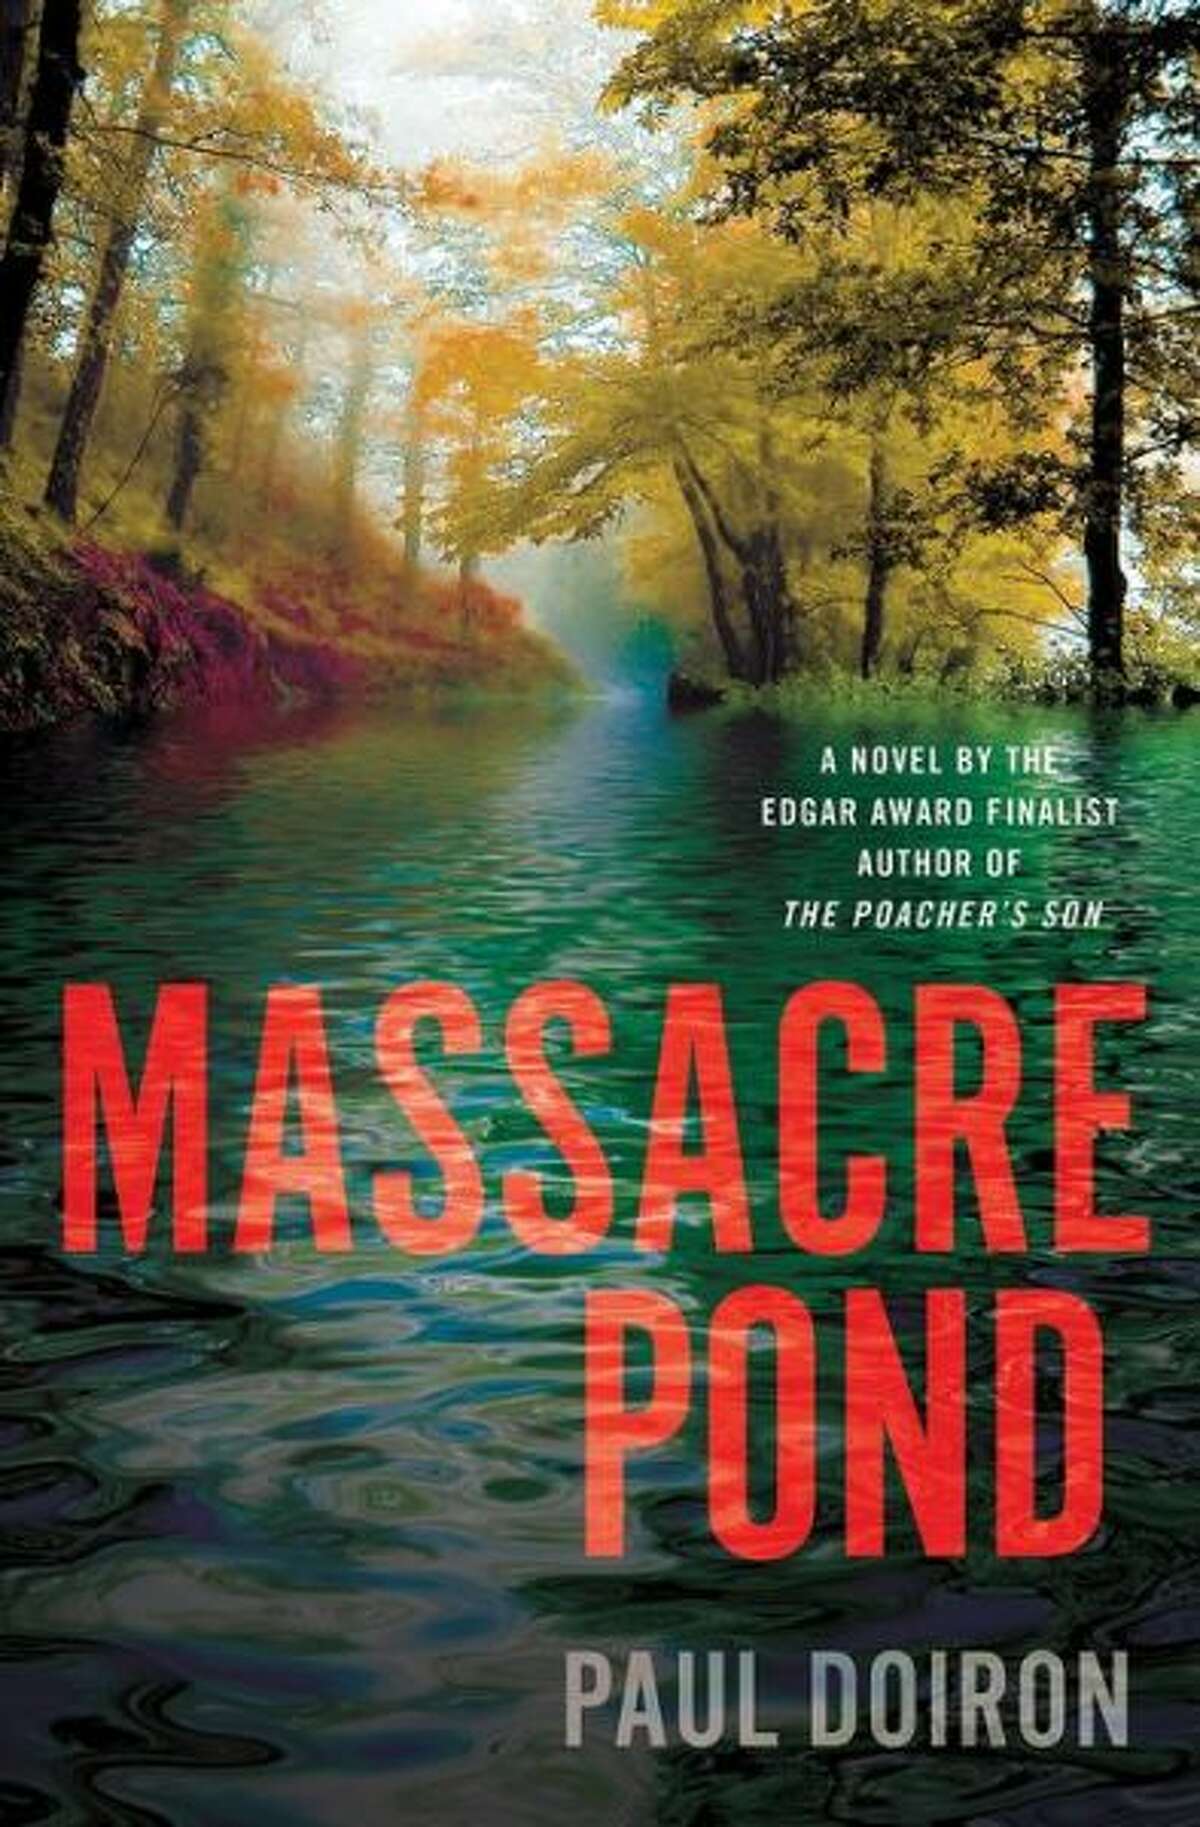 "Massacre Pond" by Paul Doiron